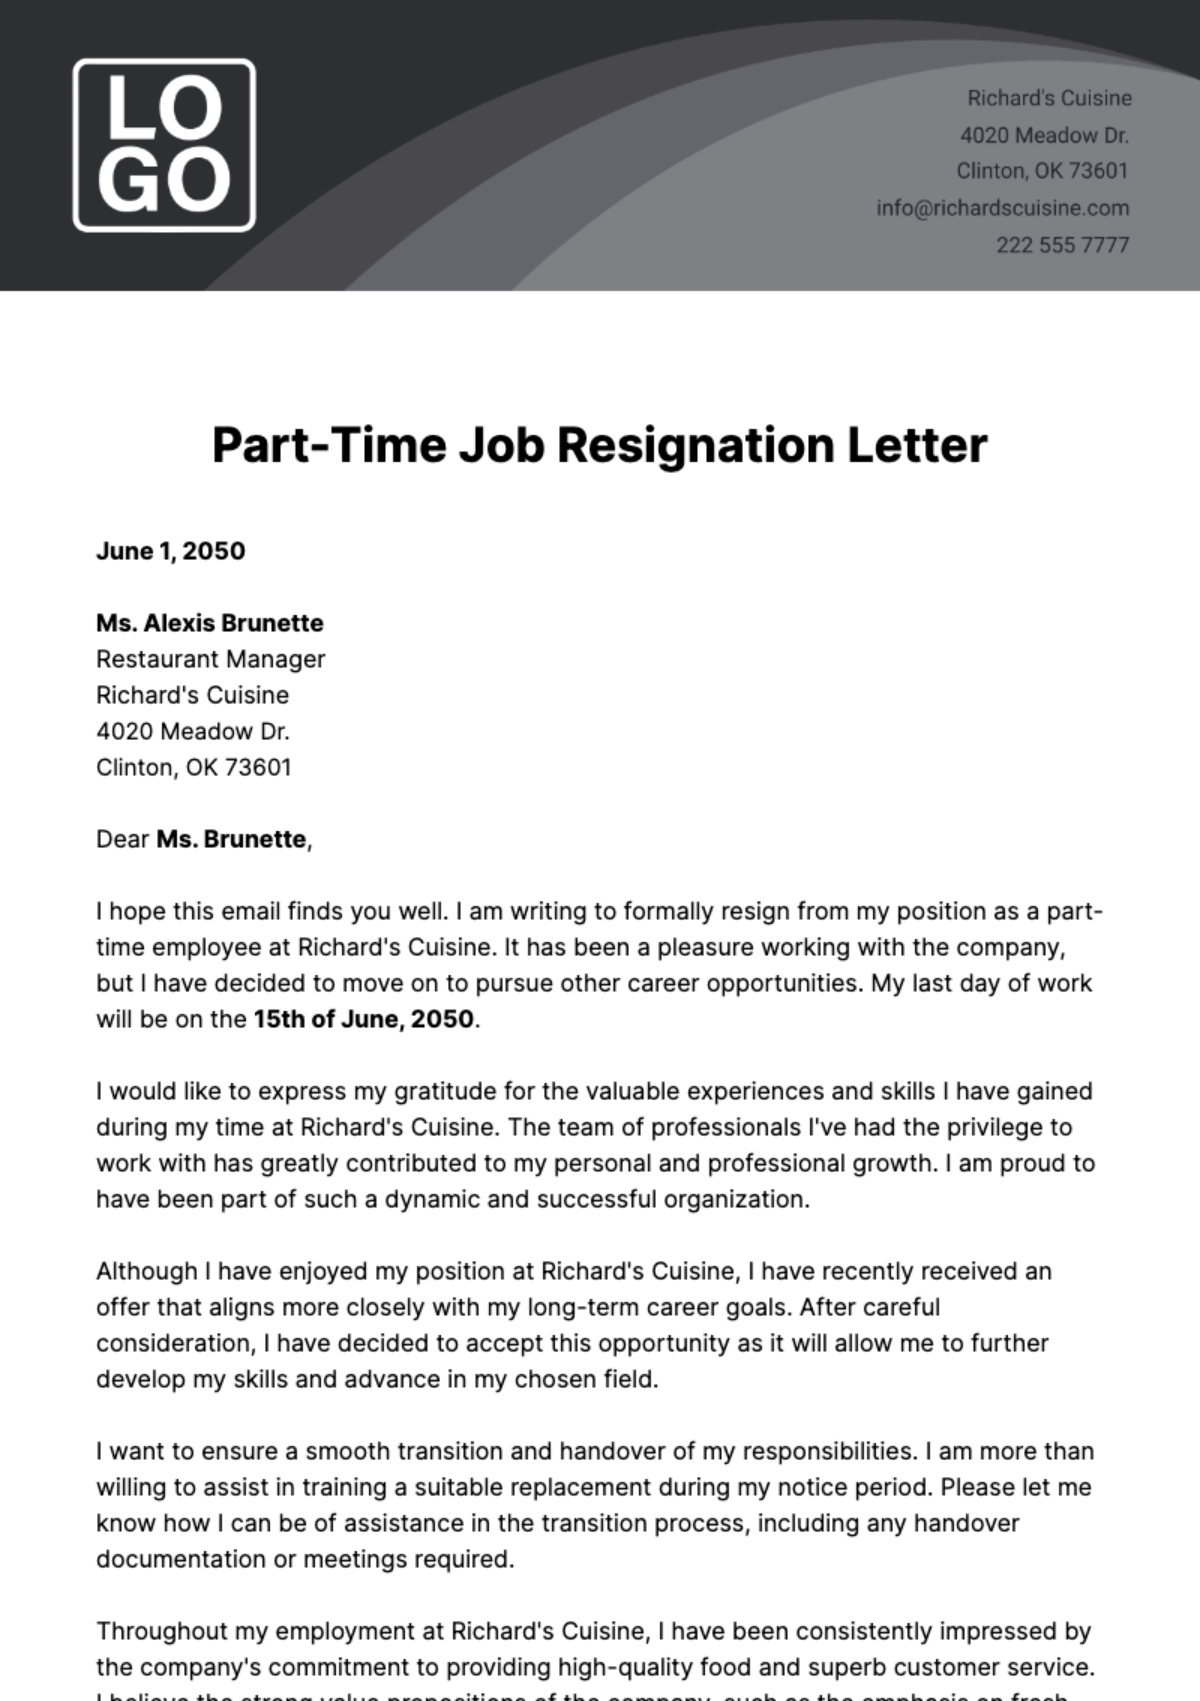 Part-Time Job Resignation Letter  Template